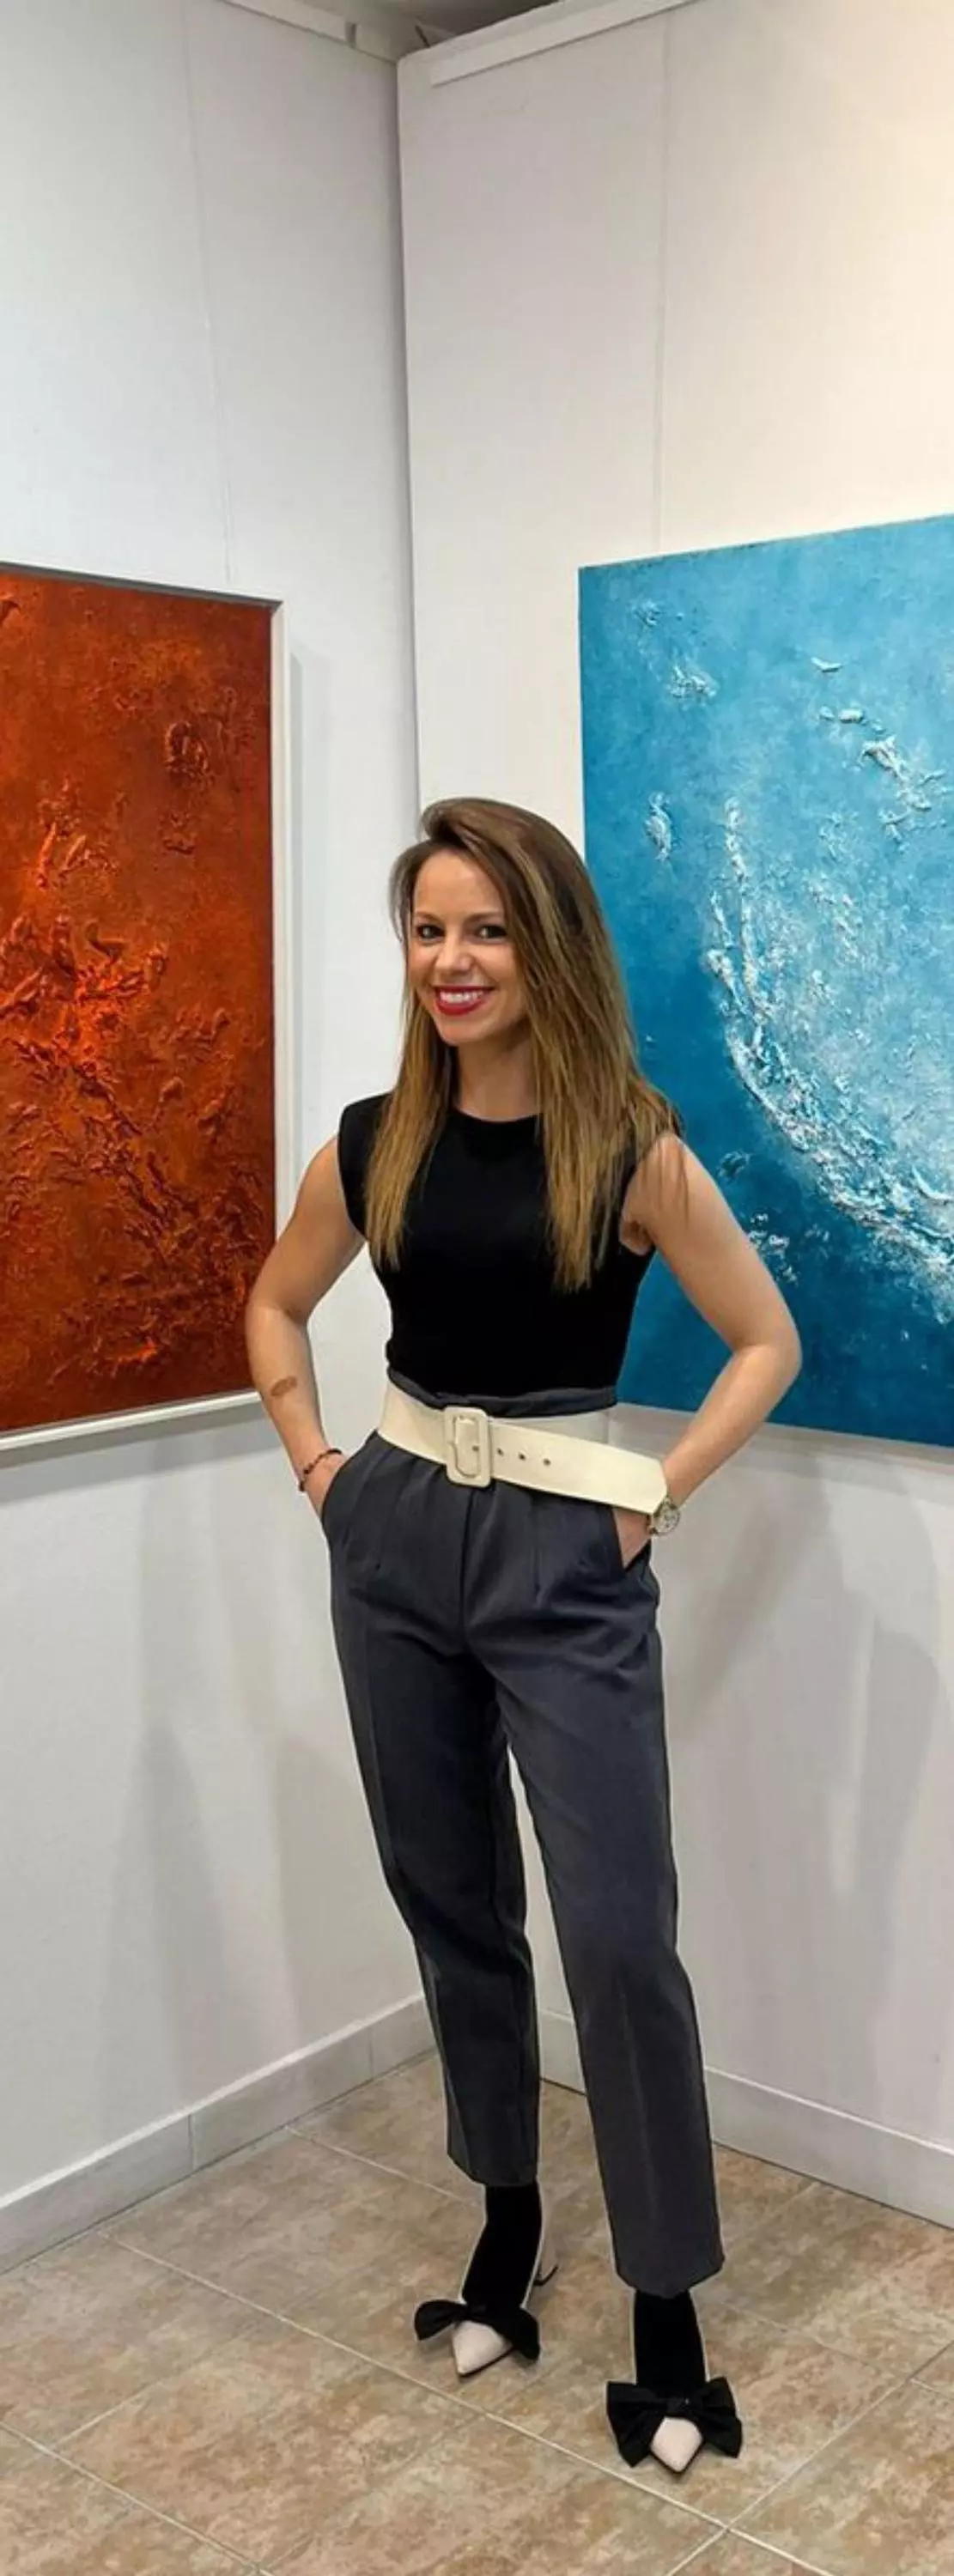 Natalia Martínez Falcó, artista: "Veo el mundo con ojos de economista, pero vivo por amor al arte"